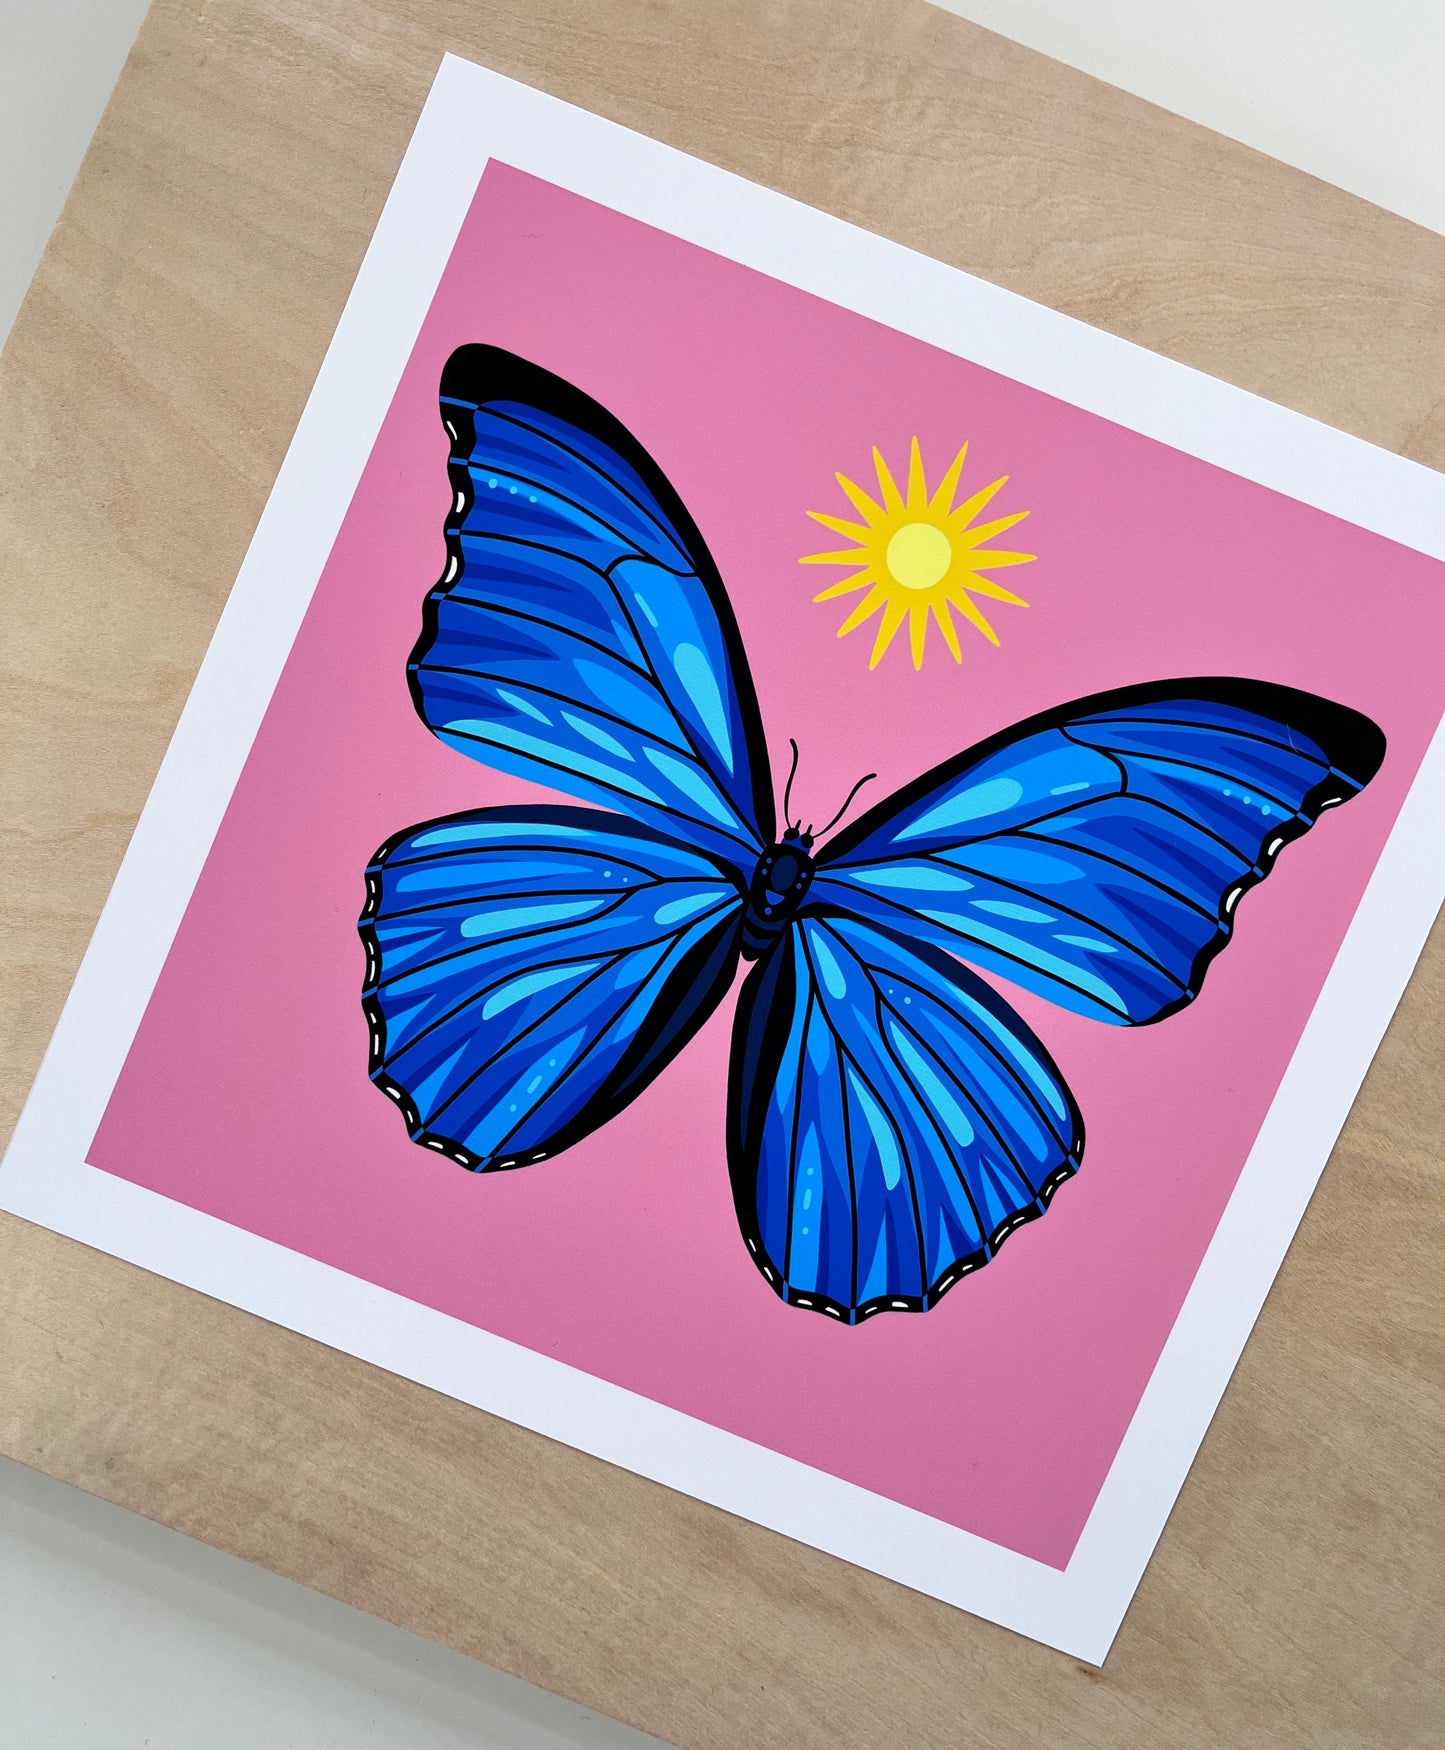 Blue Morpho Butterfly - Art Print